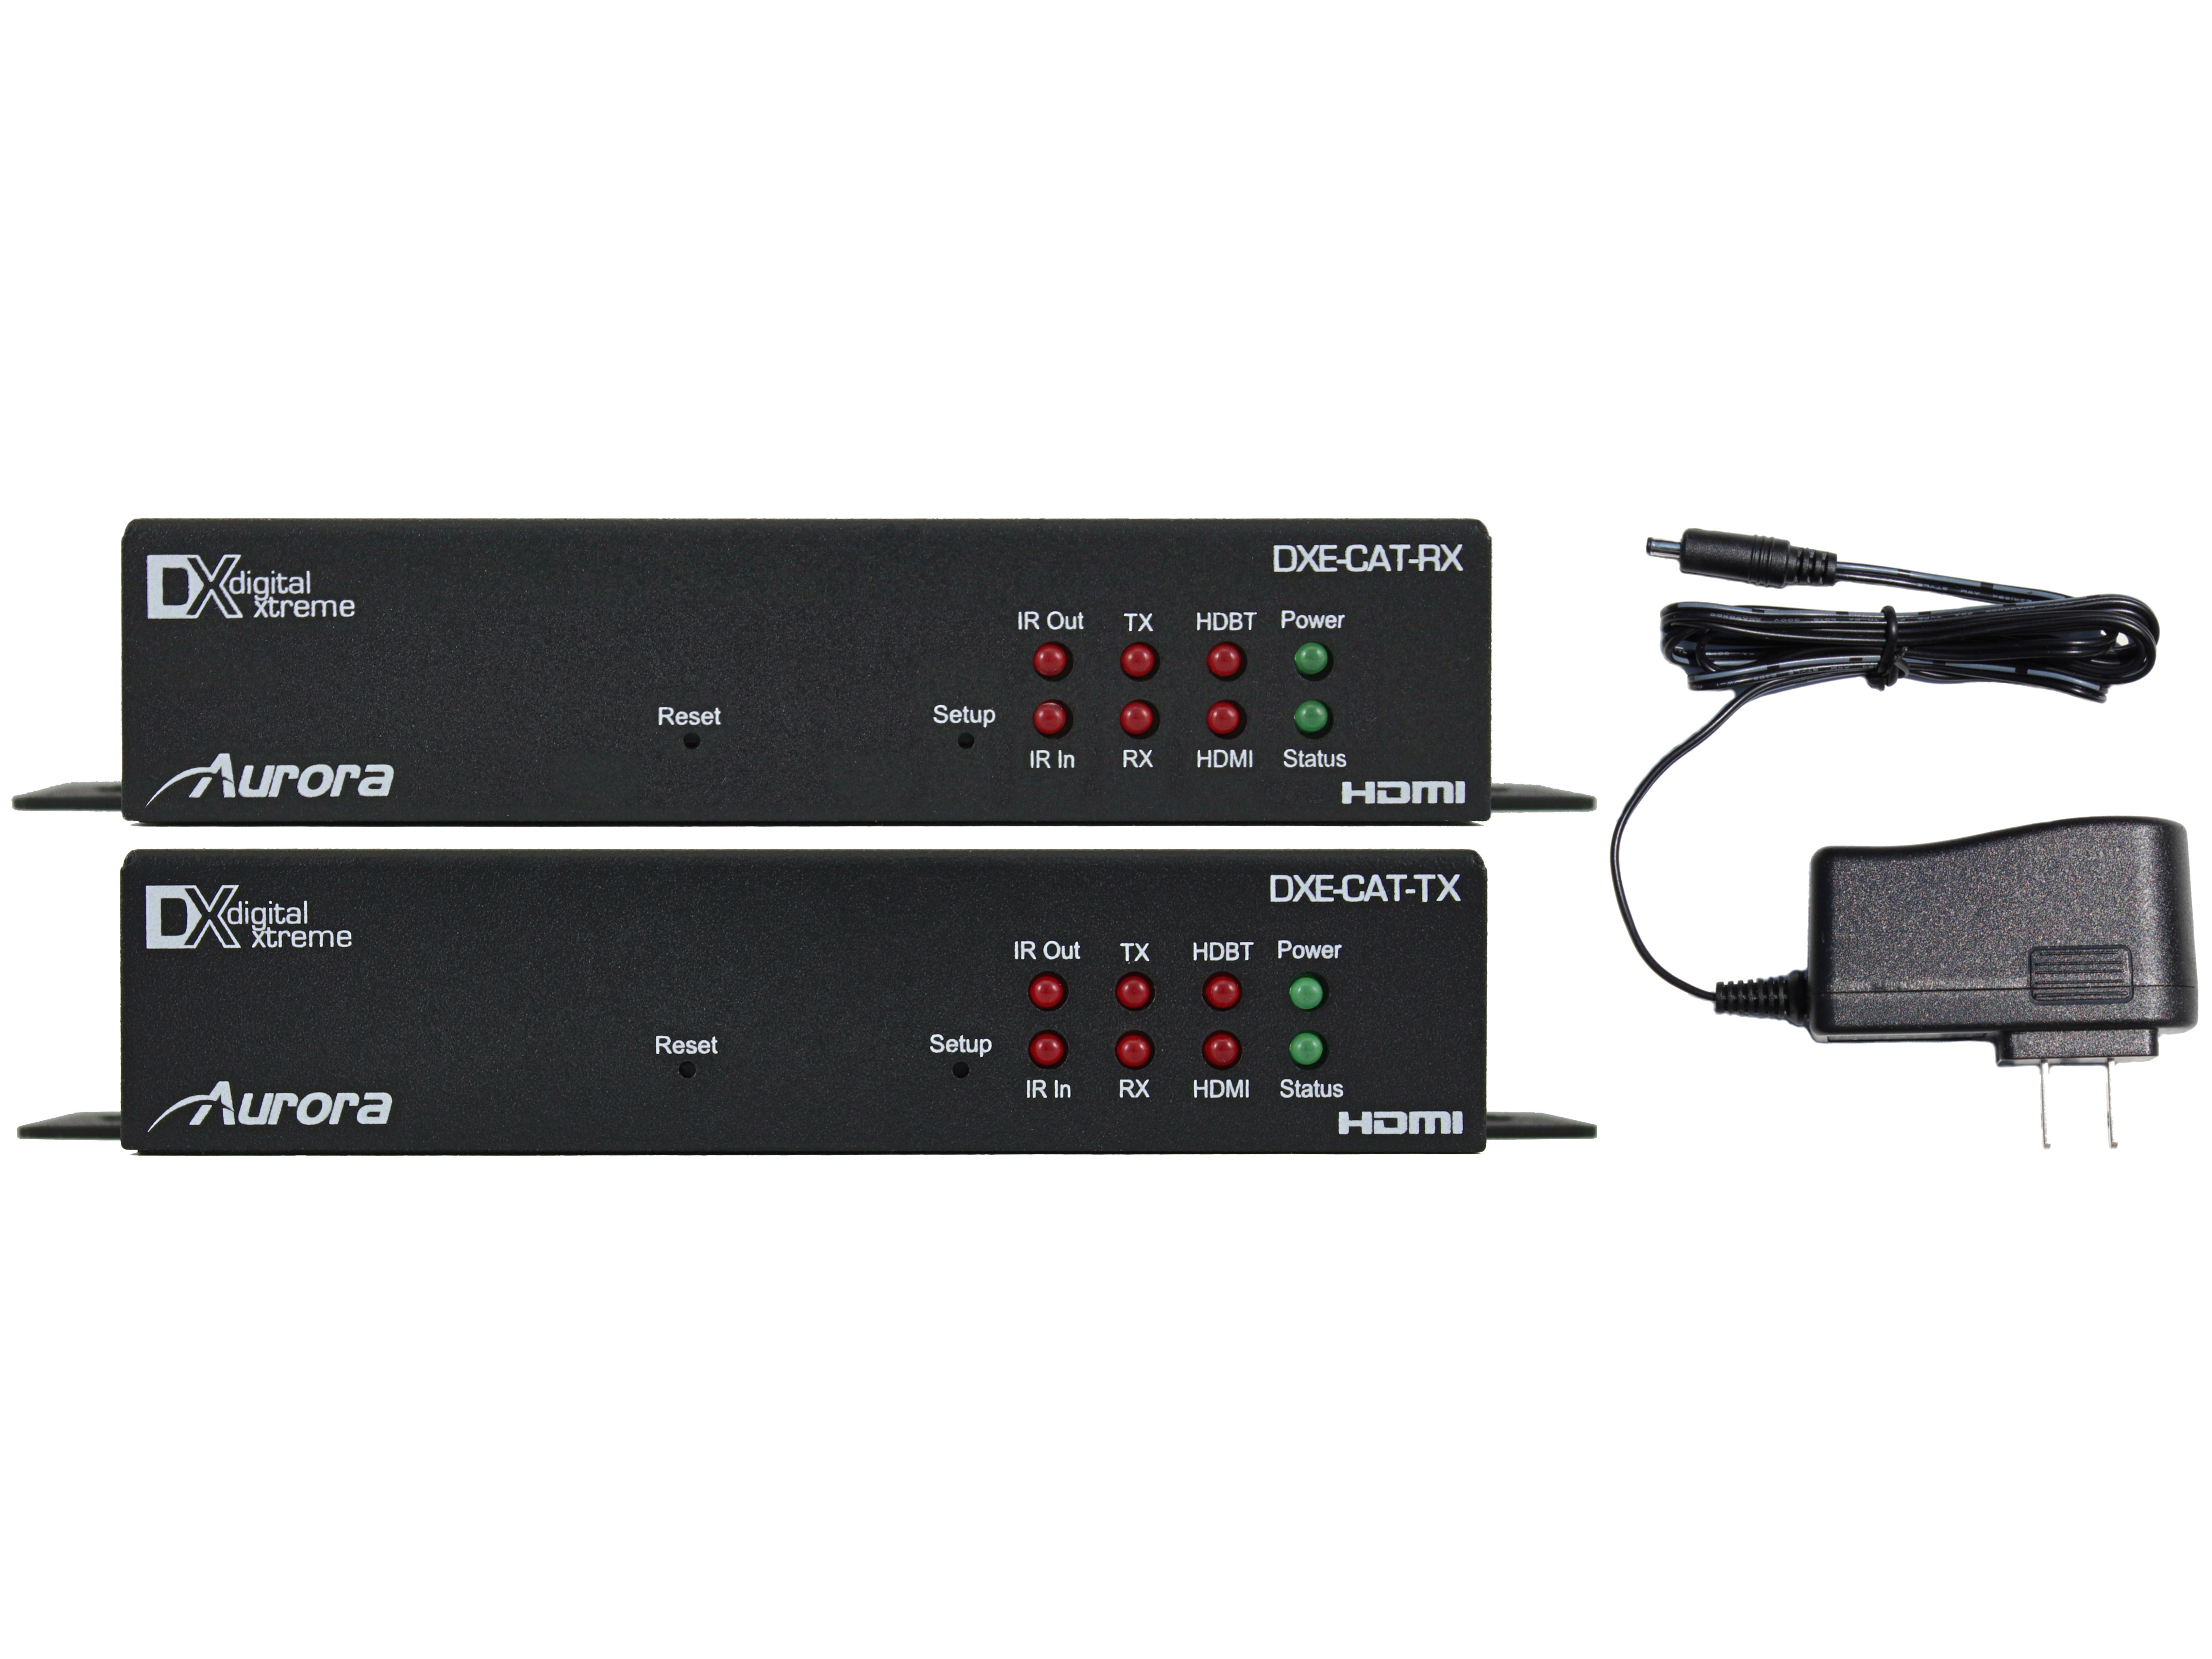 DXE-CAT-S2-4K HDMI HDBaseT CAT Extender (Transmitter/Receiver) 183m/600ft Kit by Aurora Multimedia